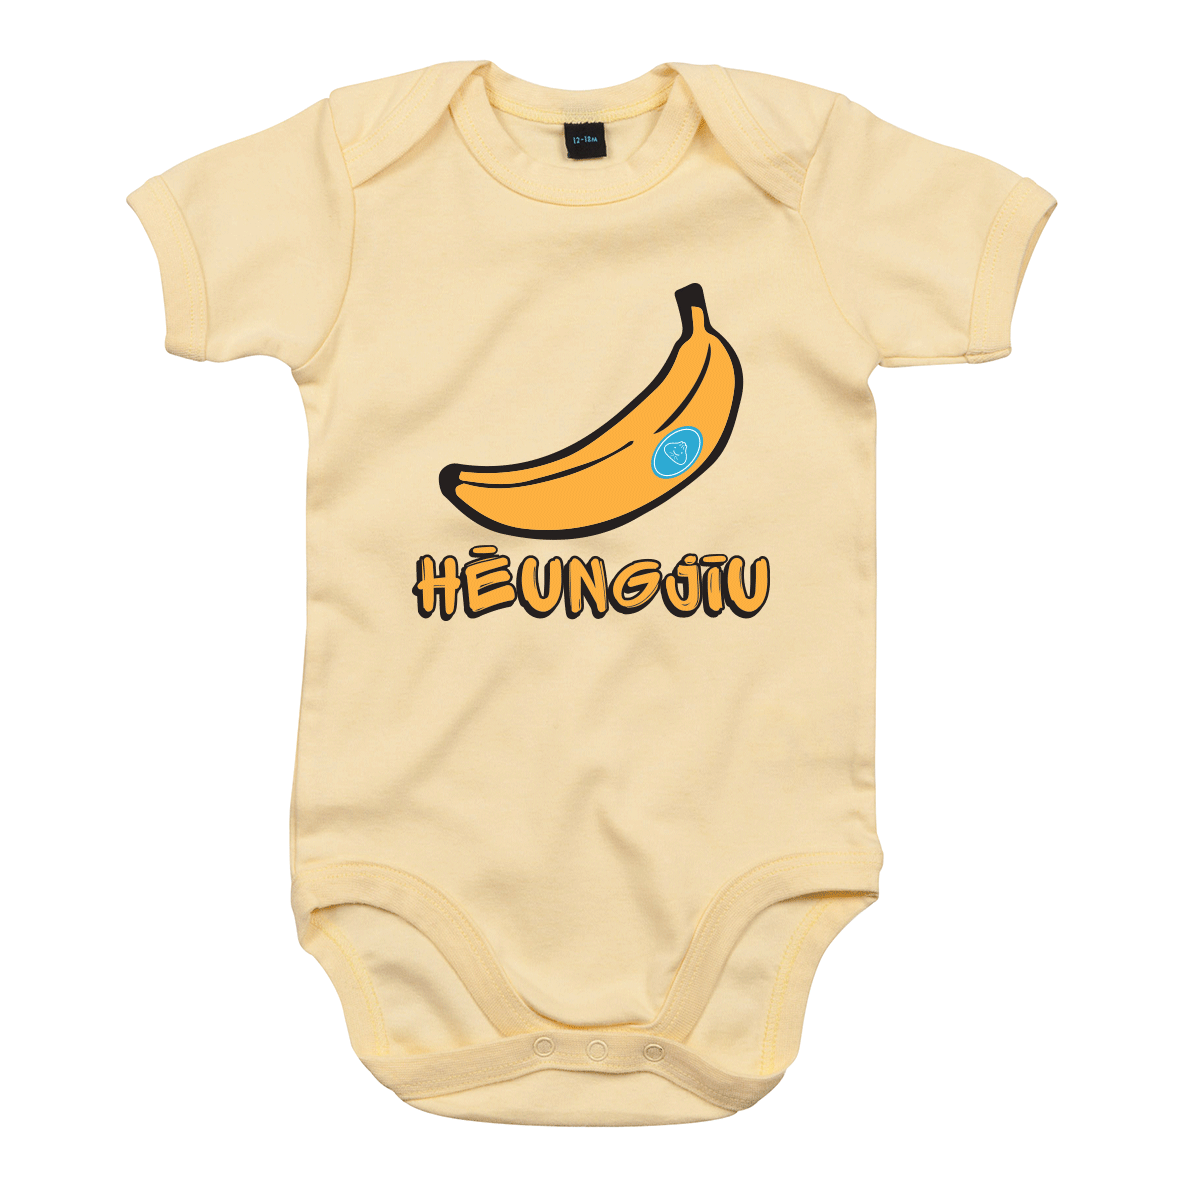 Heungjiu (Banana) Baby Organic Bodysuit